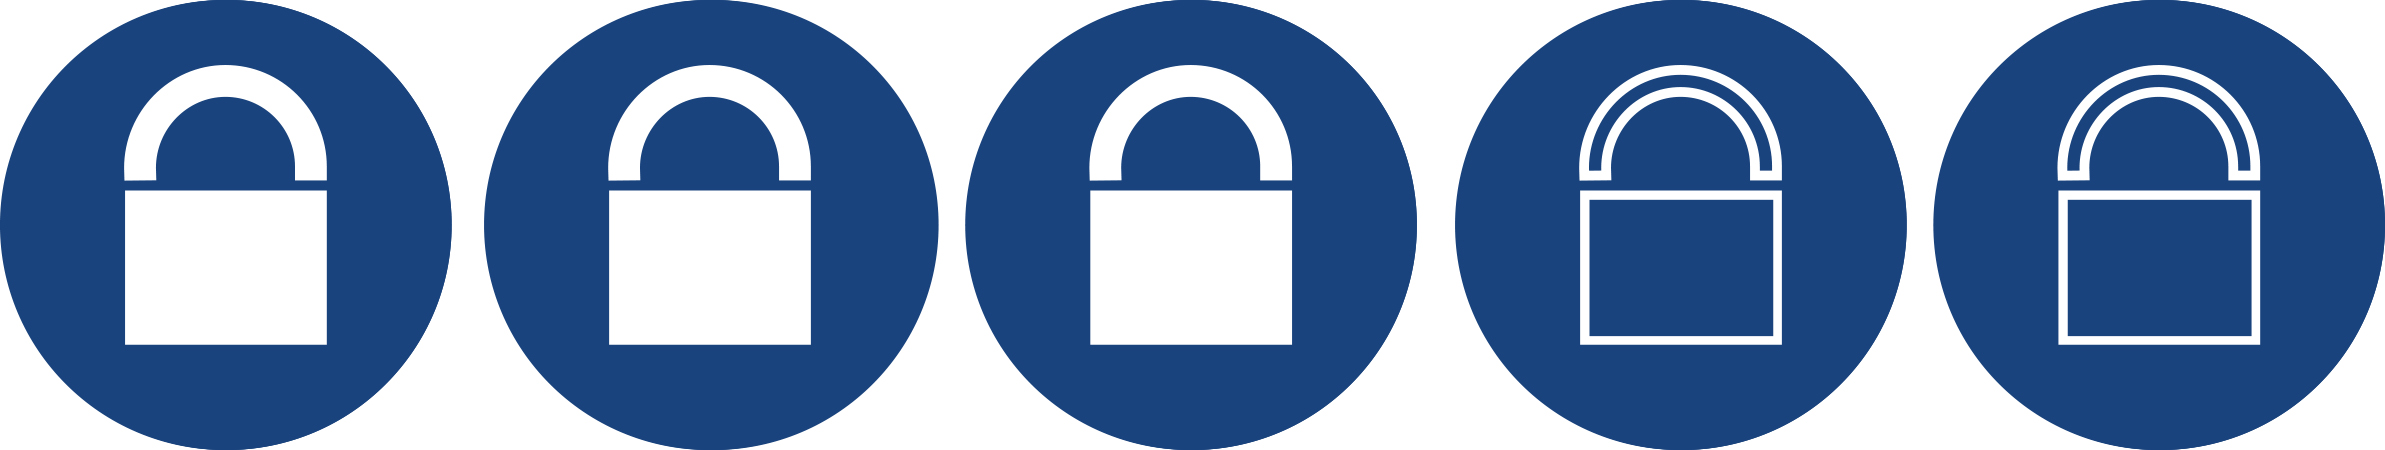 Classificazione di sicurezza Viro https://www.viro.it/files/immagini/2RuoteIT.jpg _blank